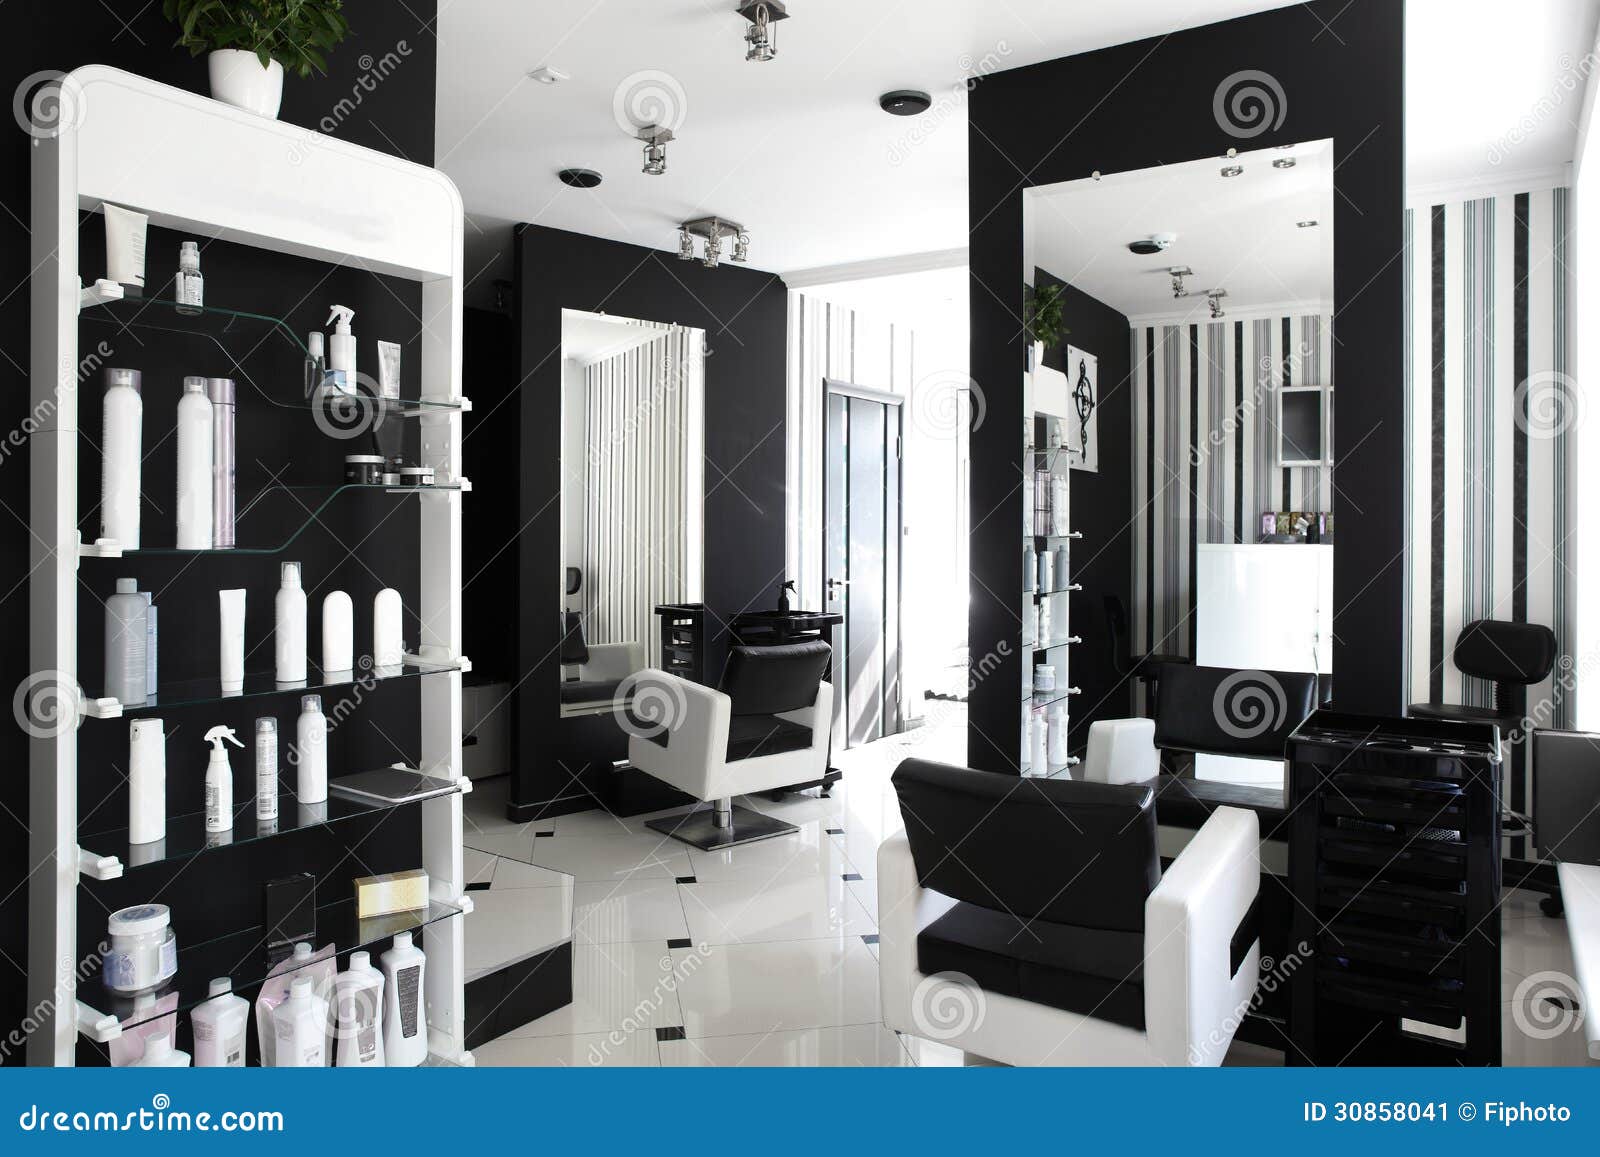 Interior Of Modern Beauty Salon Stock Image - Image: 30858041